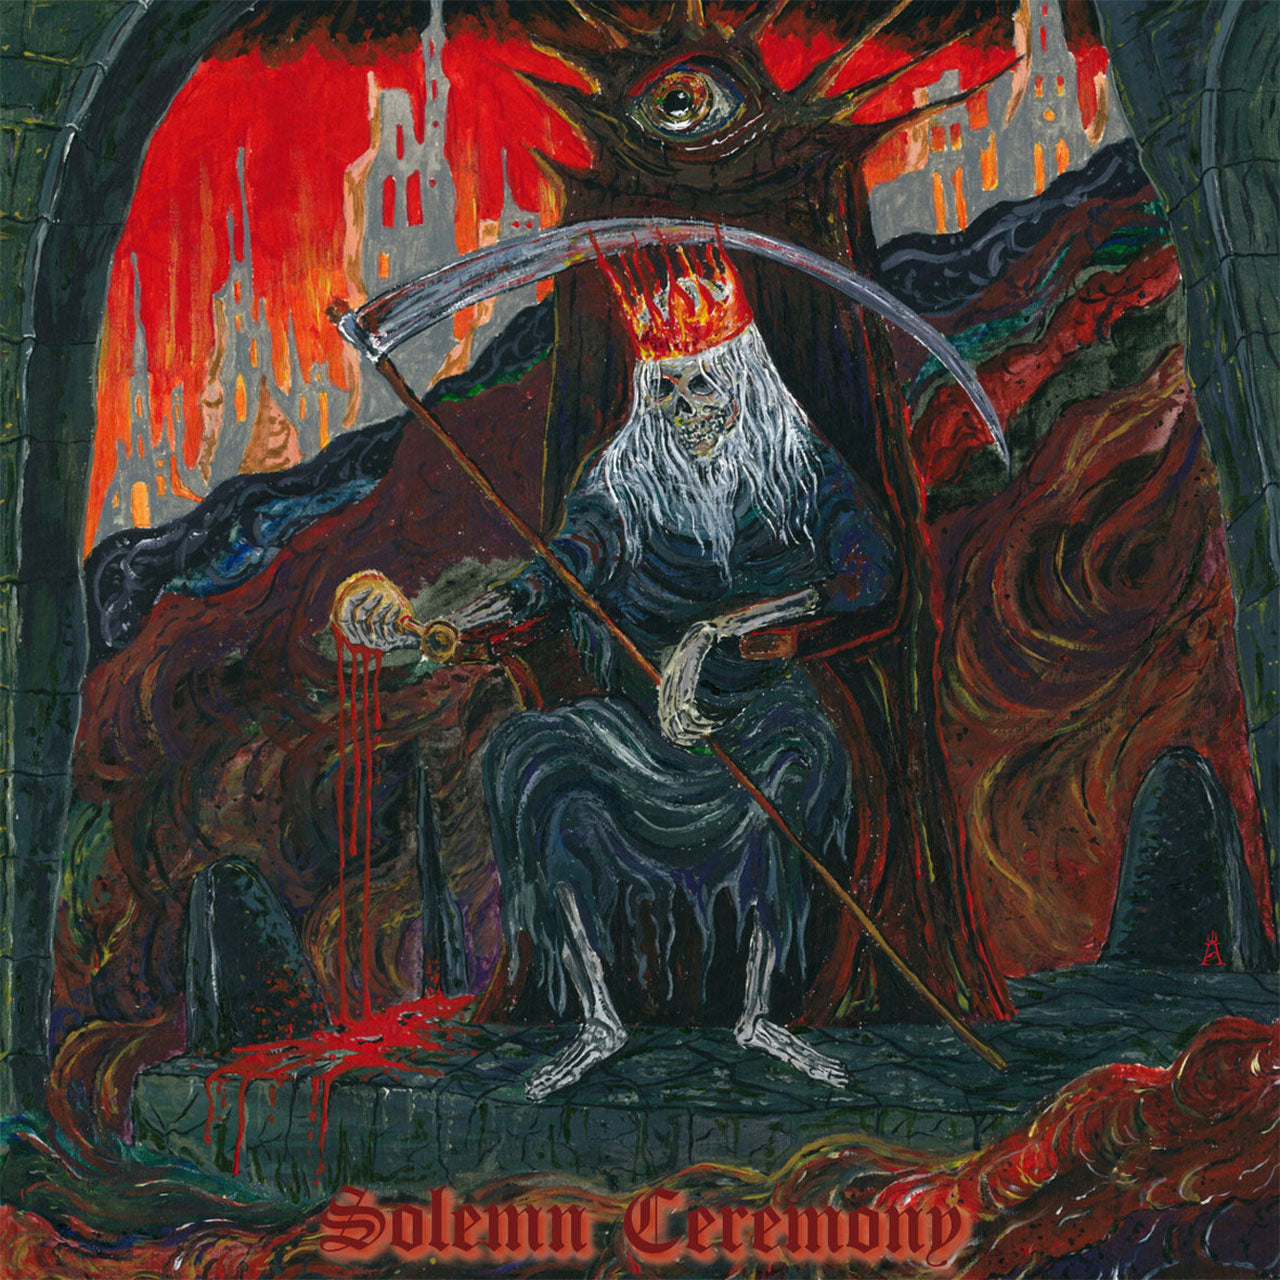 Solemn Ceremony - Solemn Ceremony (CD)